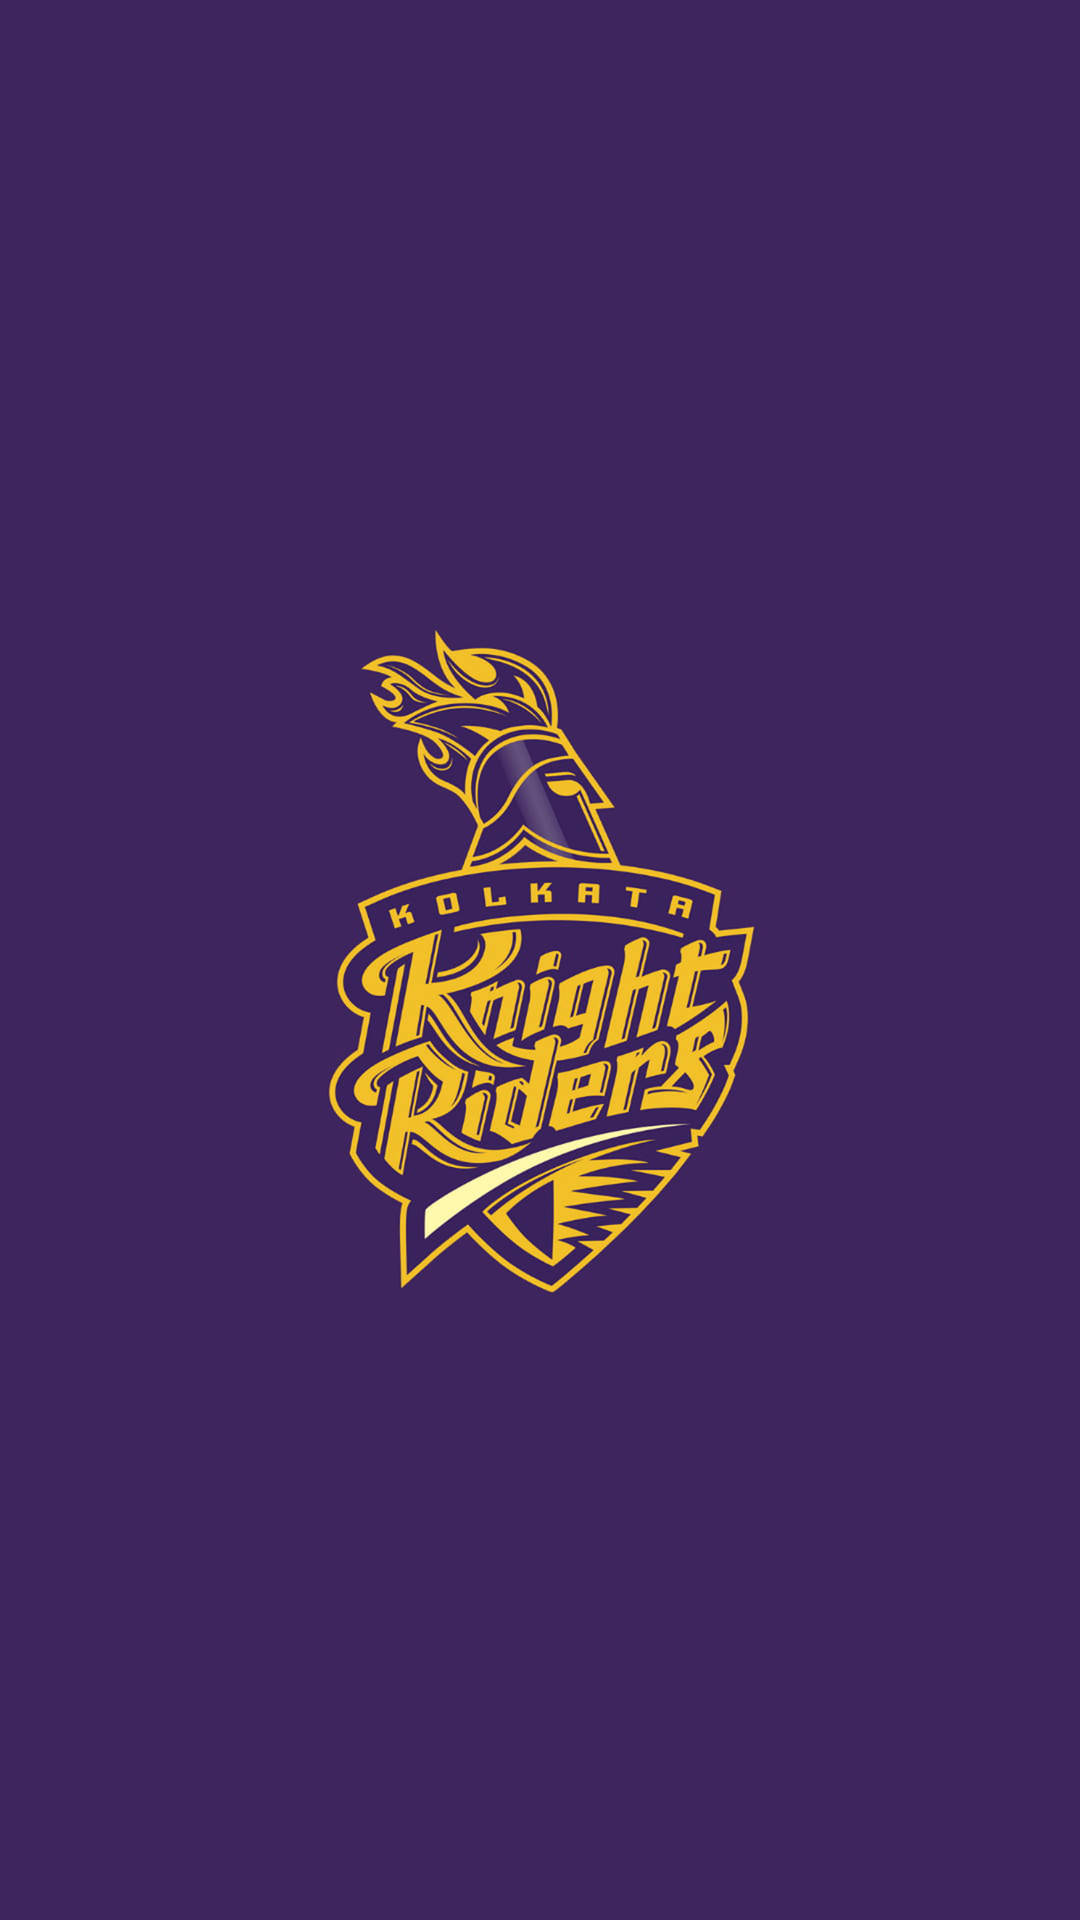 Minimalistischekolkata Knight Riders Wallpaper